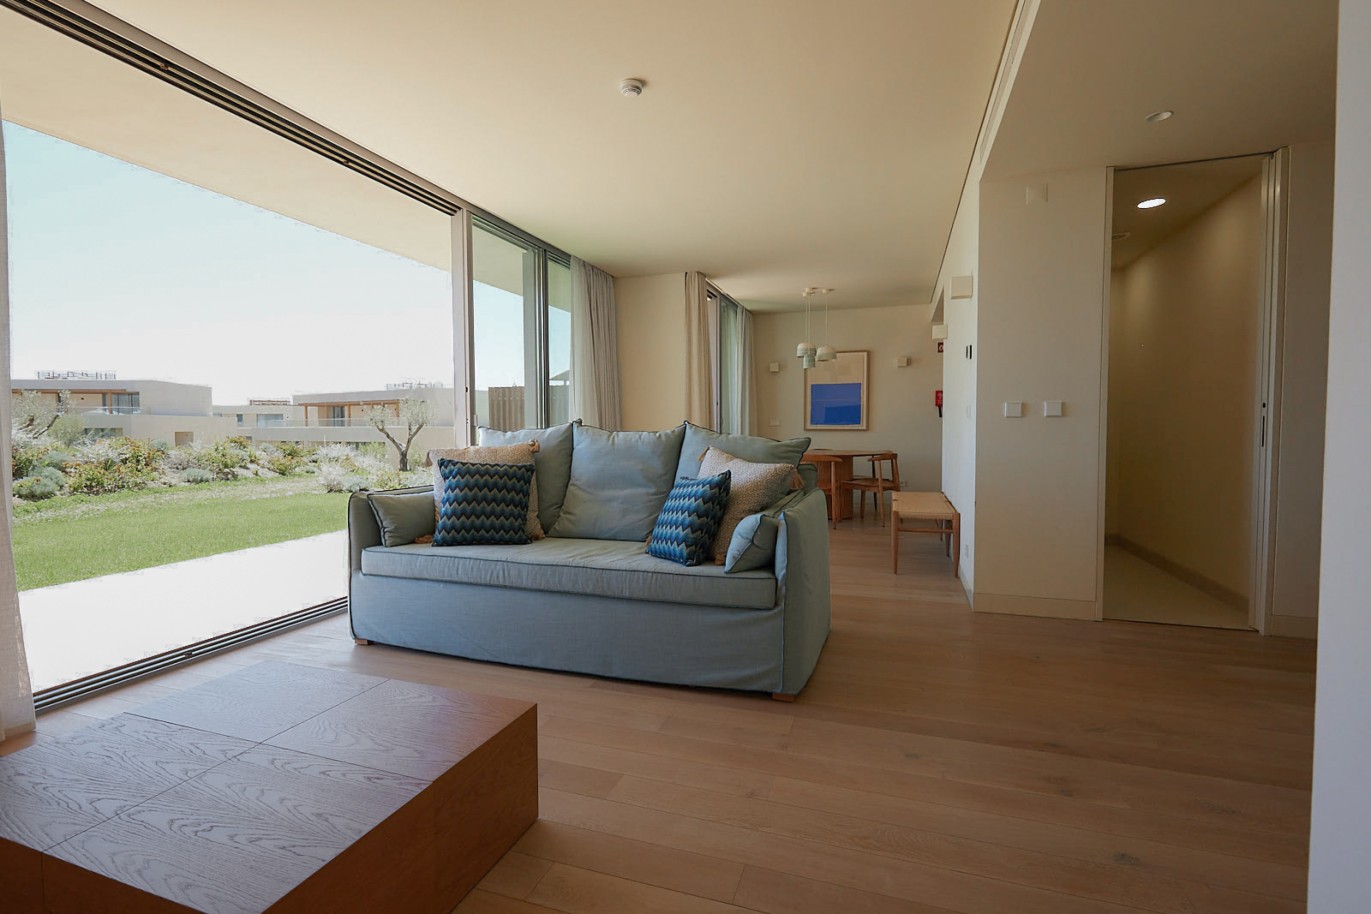 2 bedroom apartment in resort, for sale in Porches, Algarve_230635